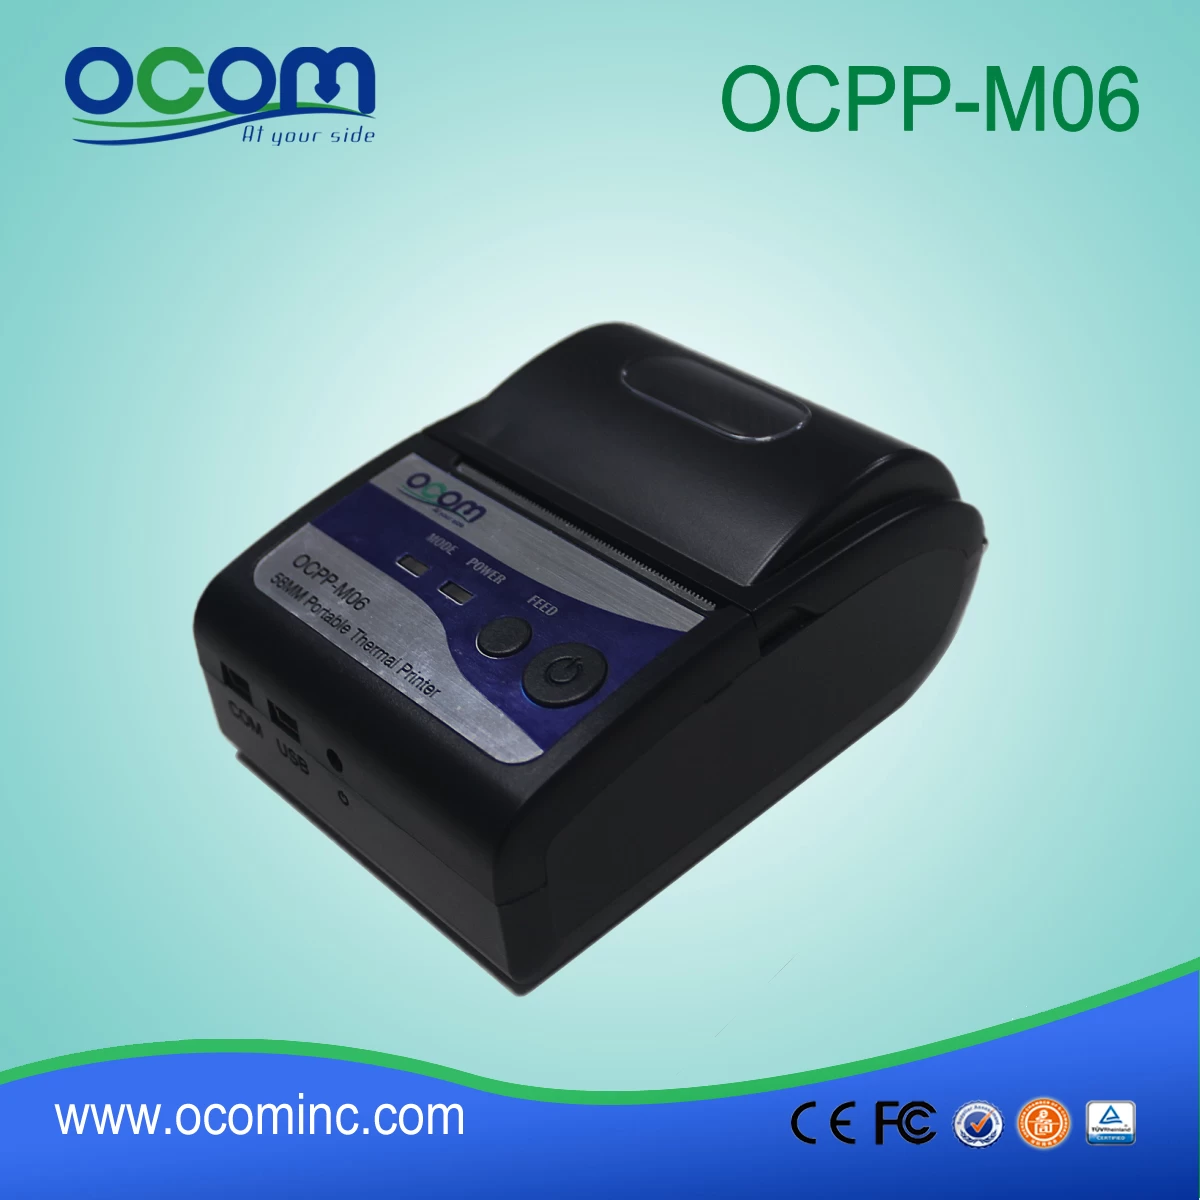 (OCPP-M06)China factory OCOM made 58mm thermal portable bluetooth mini printer